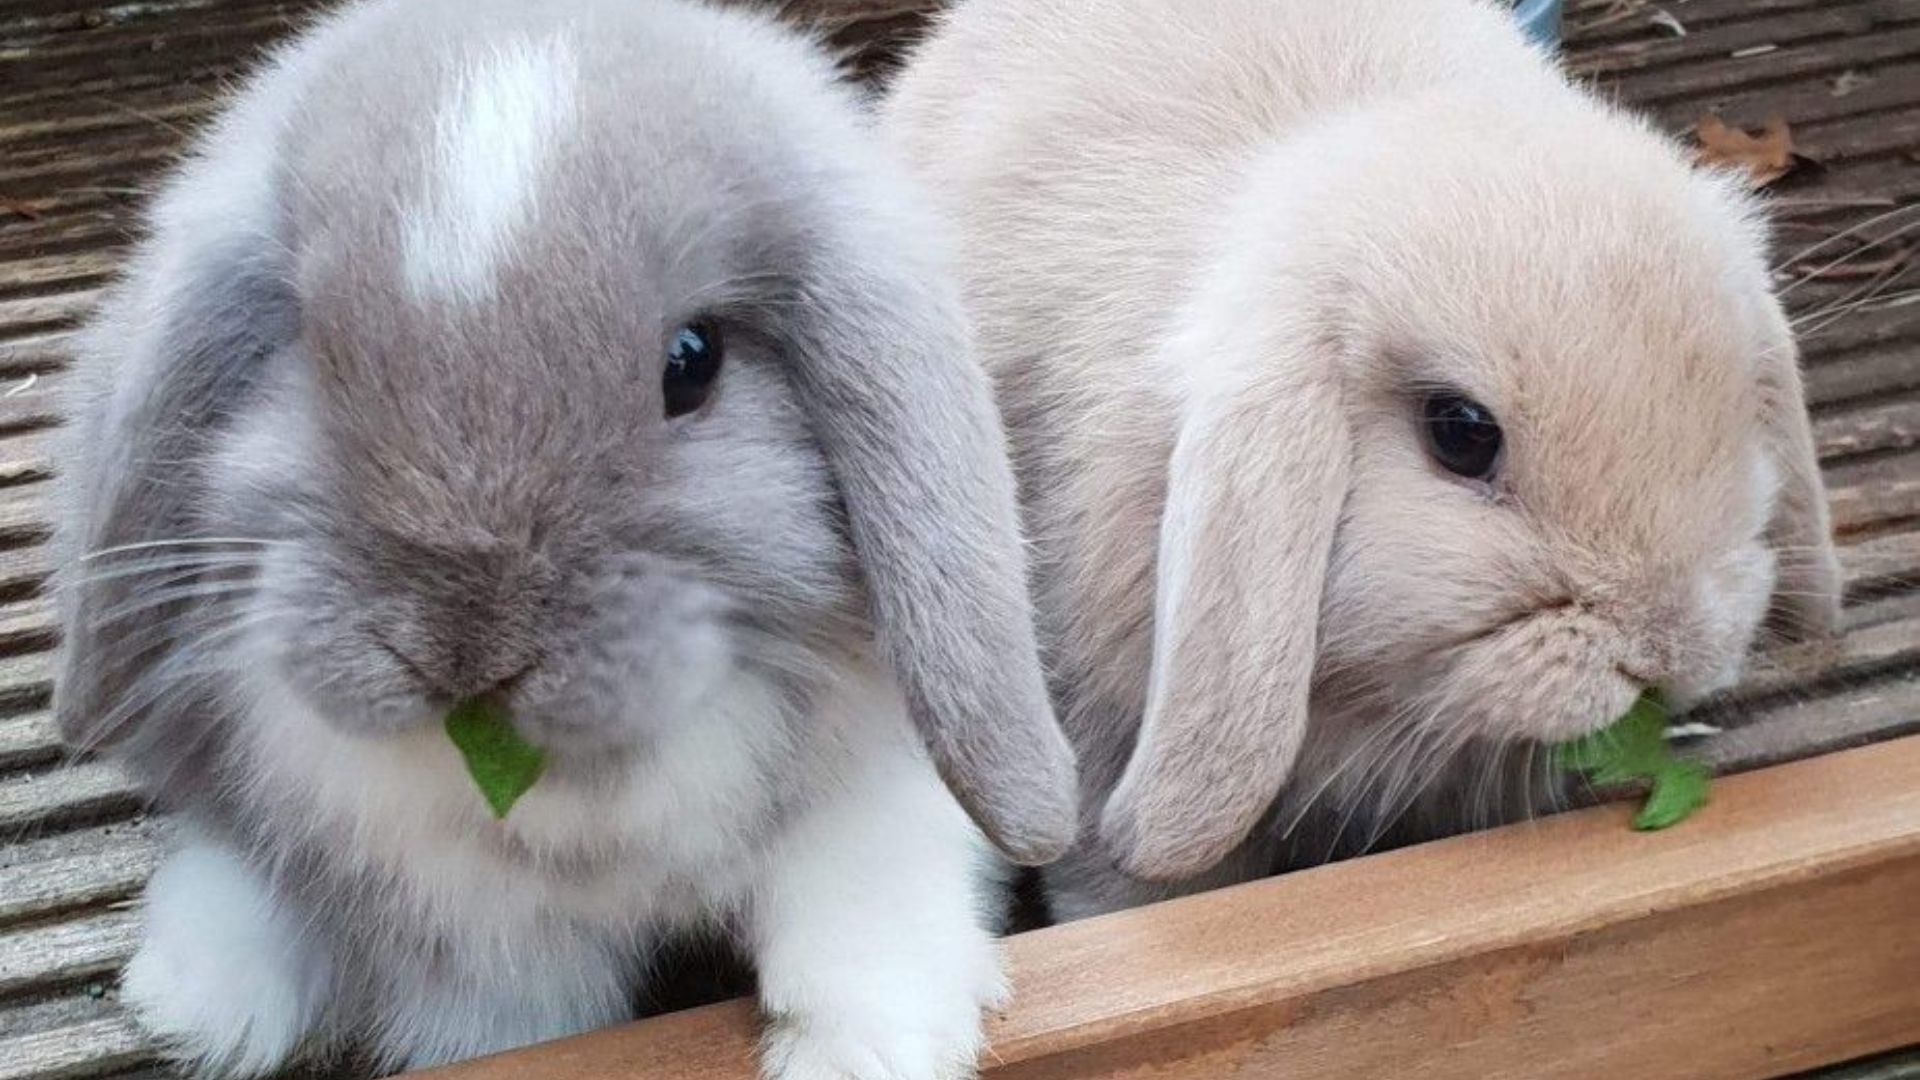 Can bunnies eat parsley